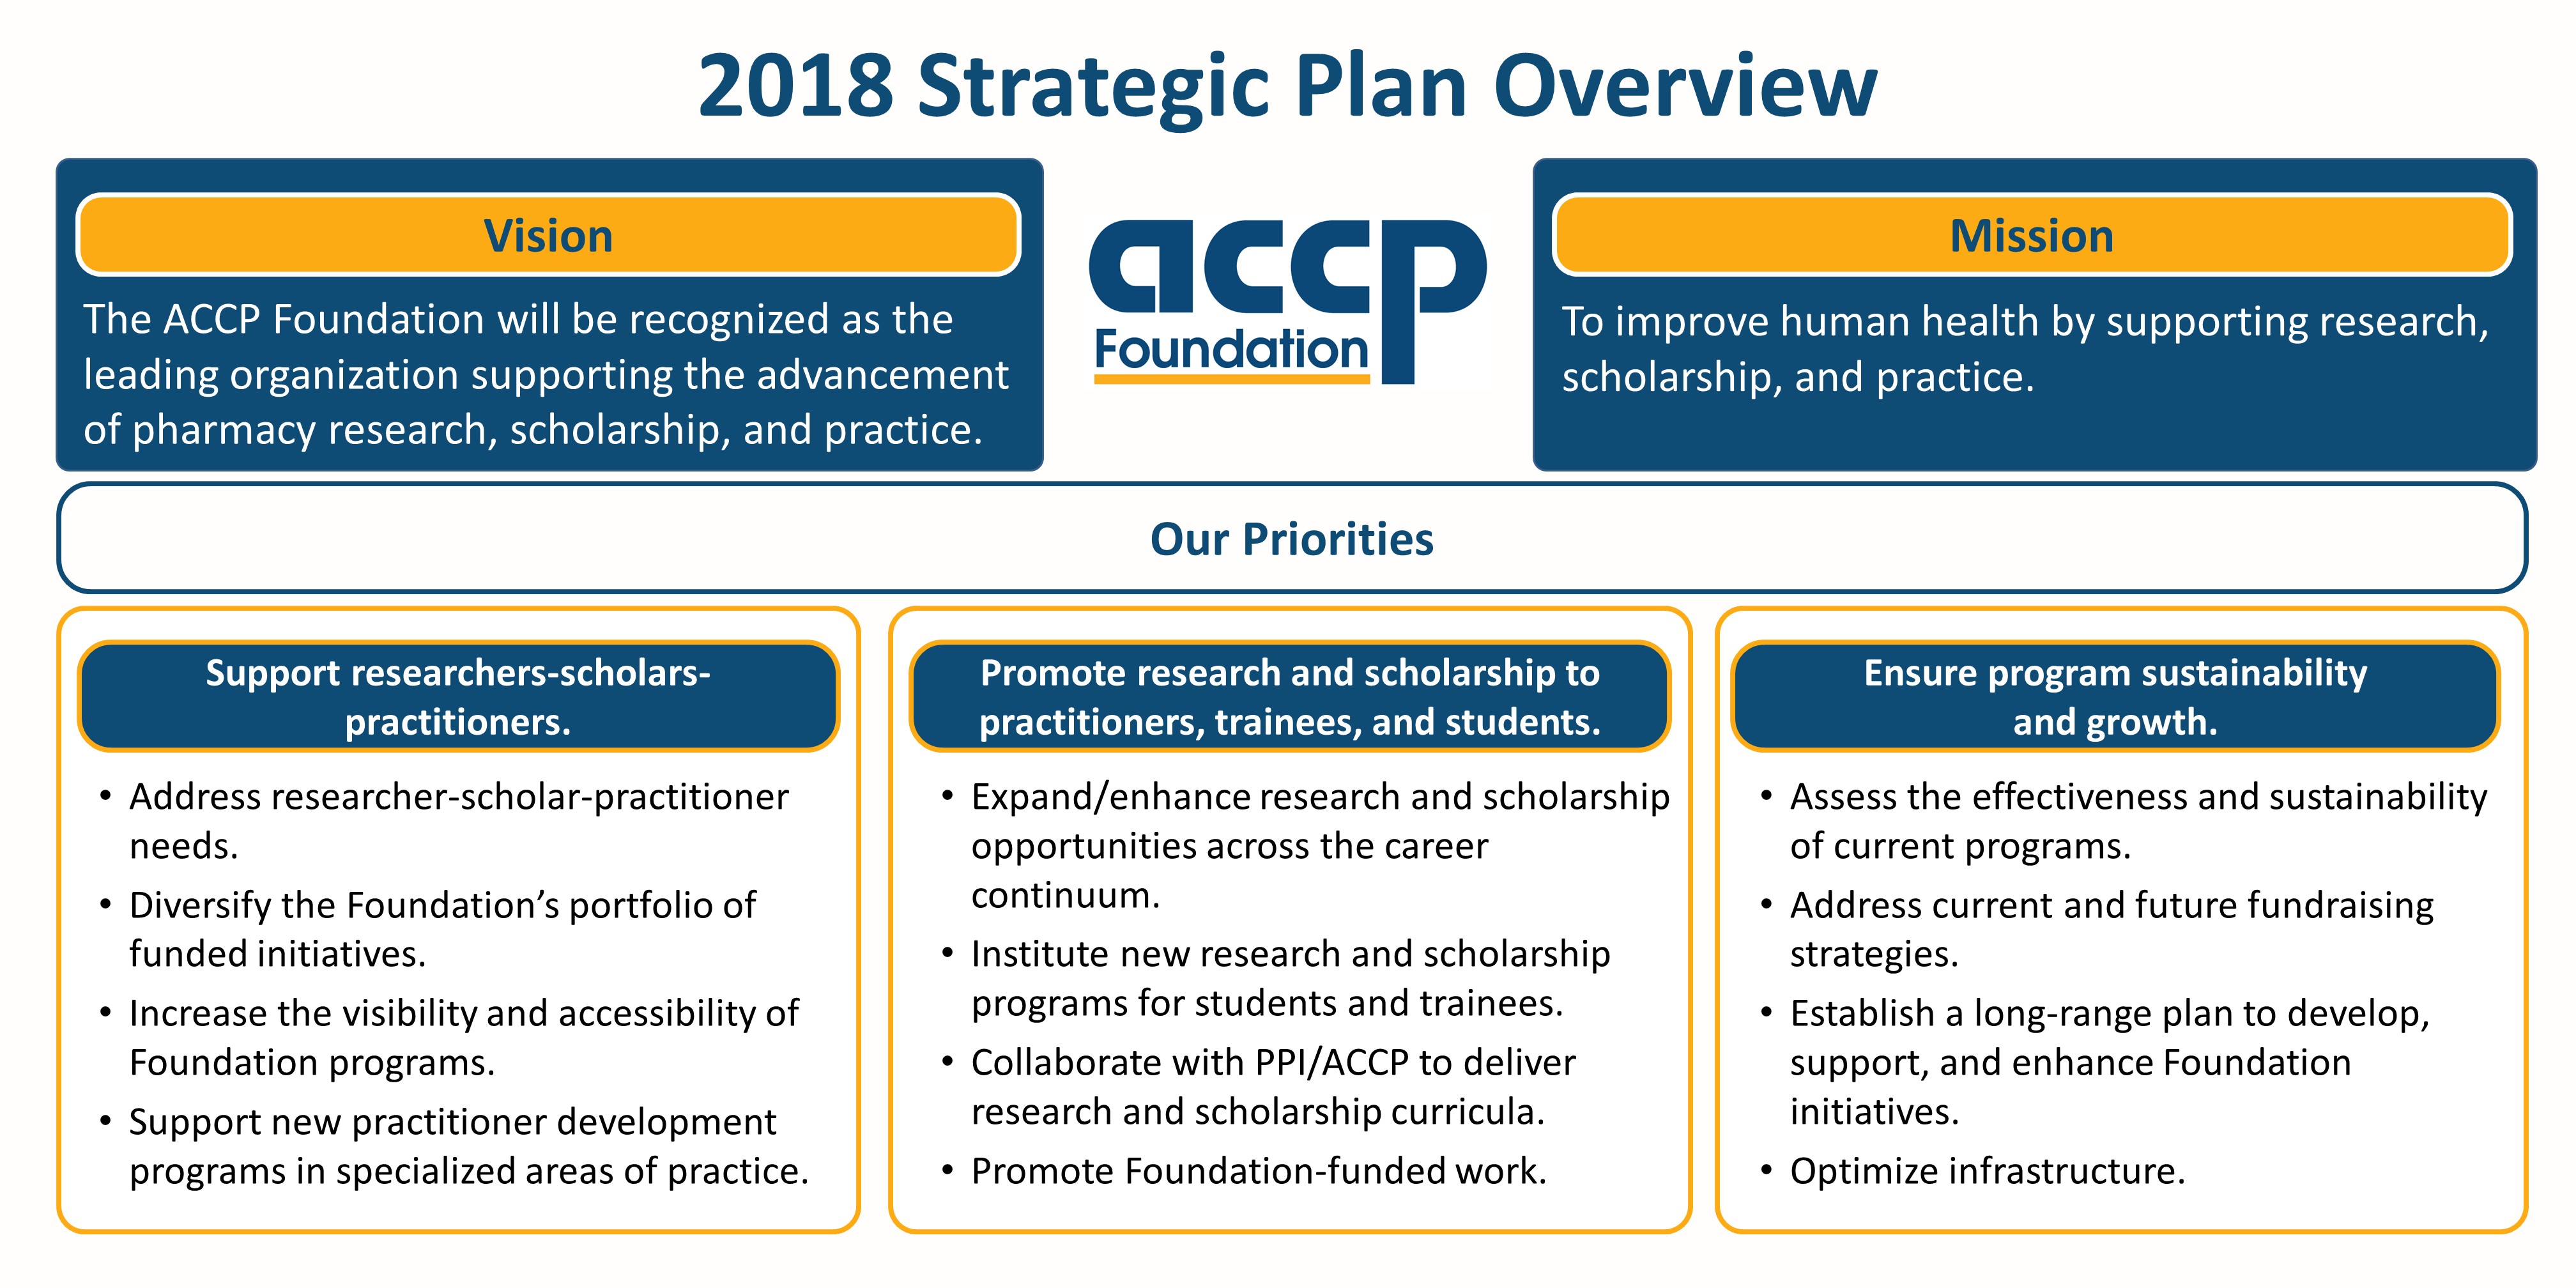 Strategic Plan Overview